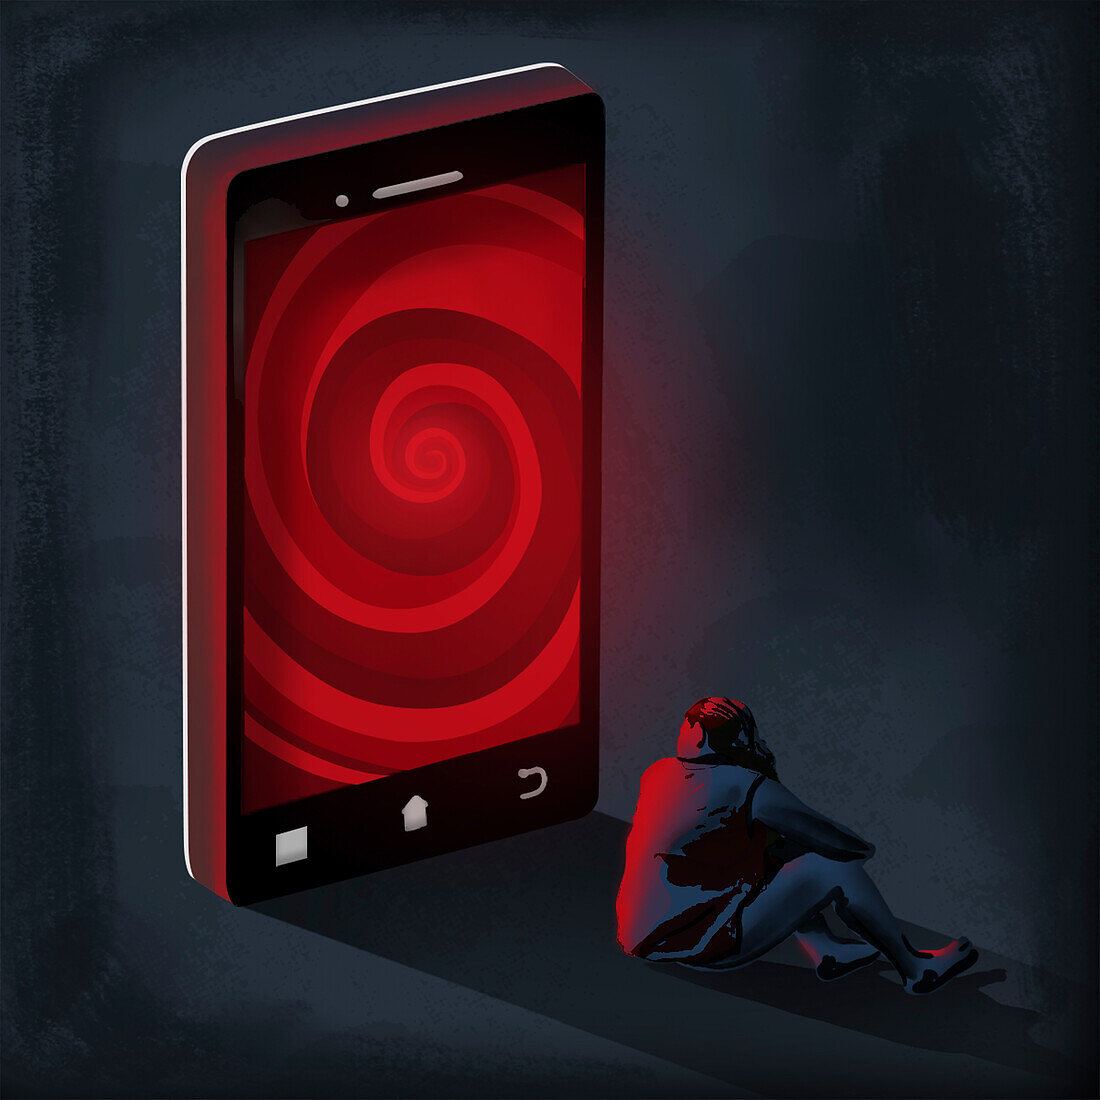 Smart phones and mental health, conceptual illustration